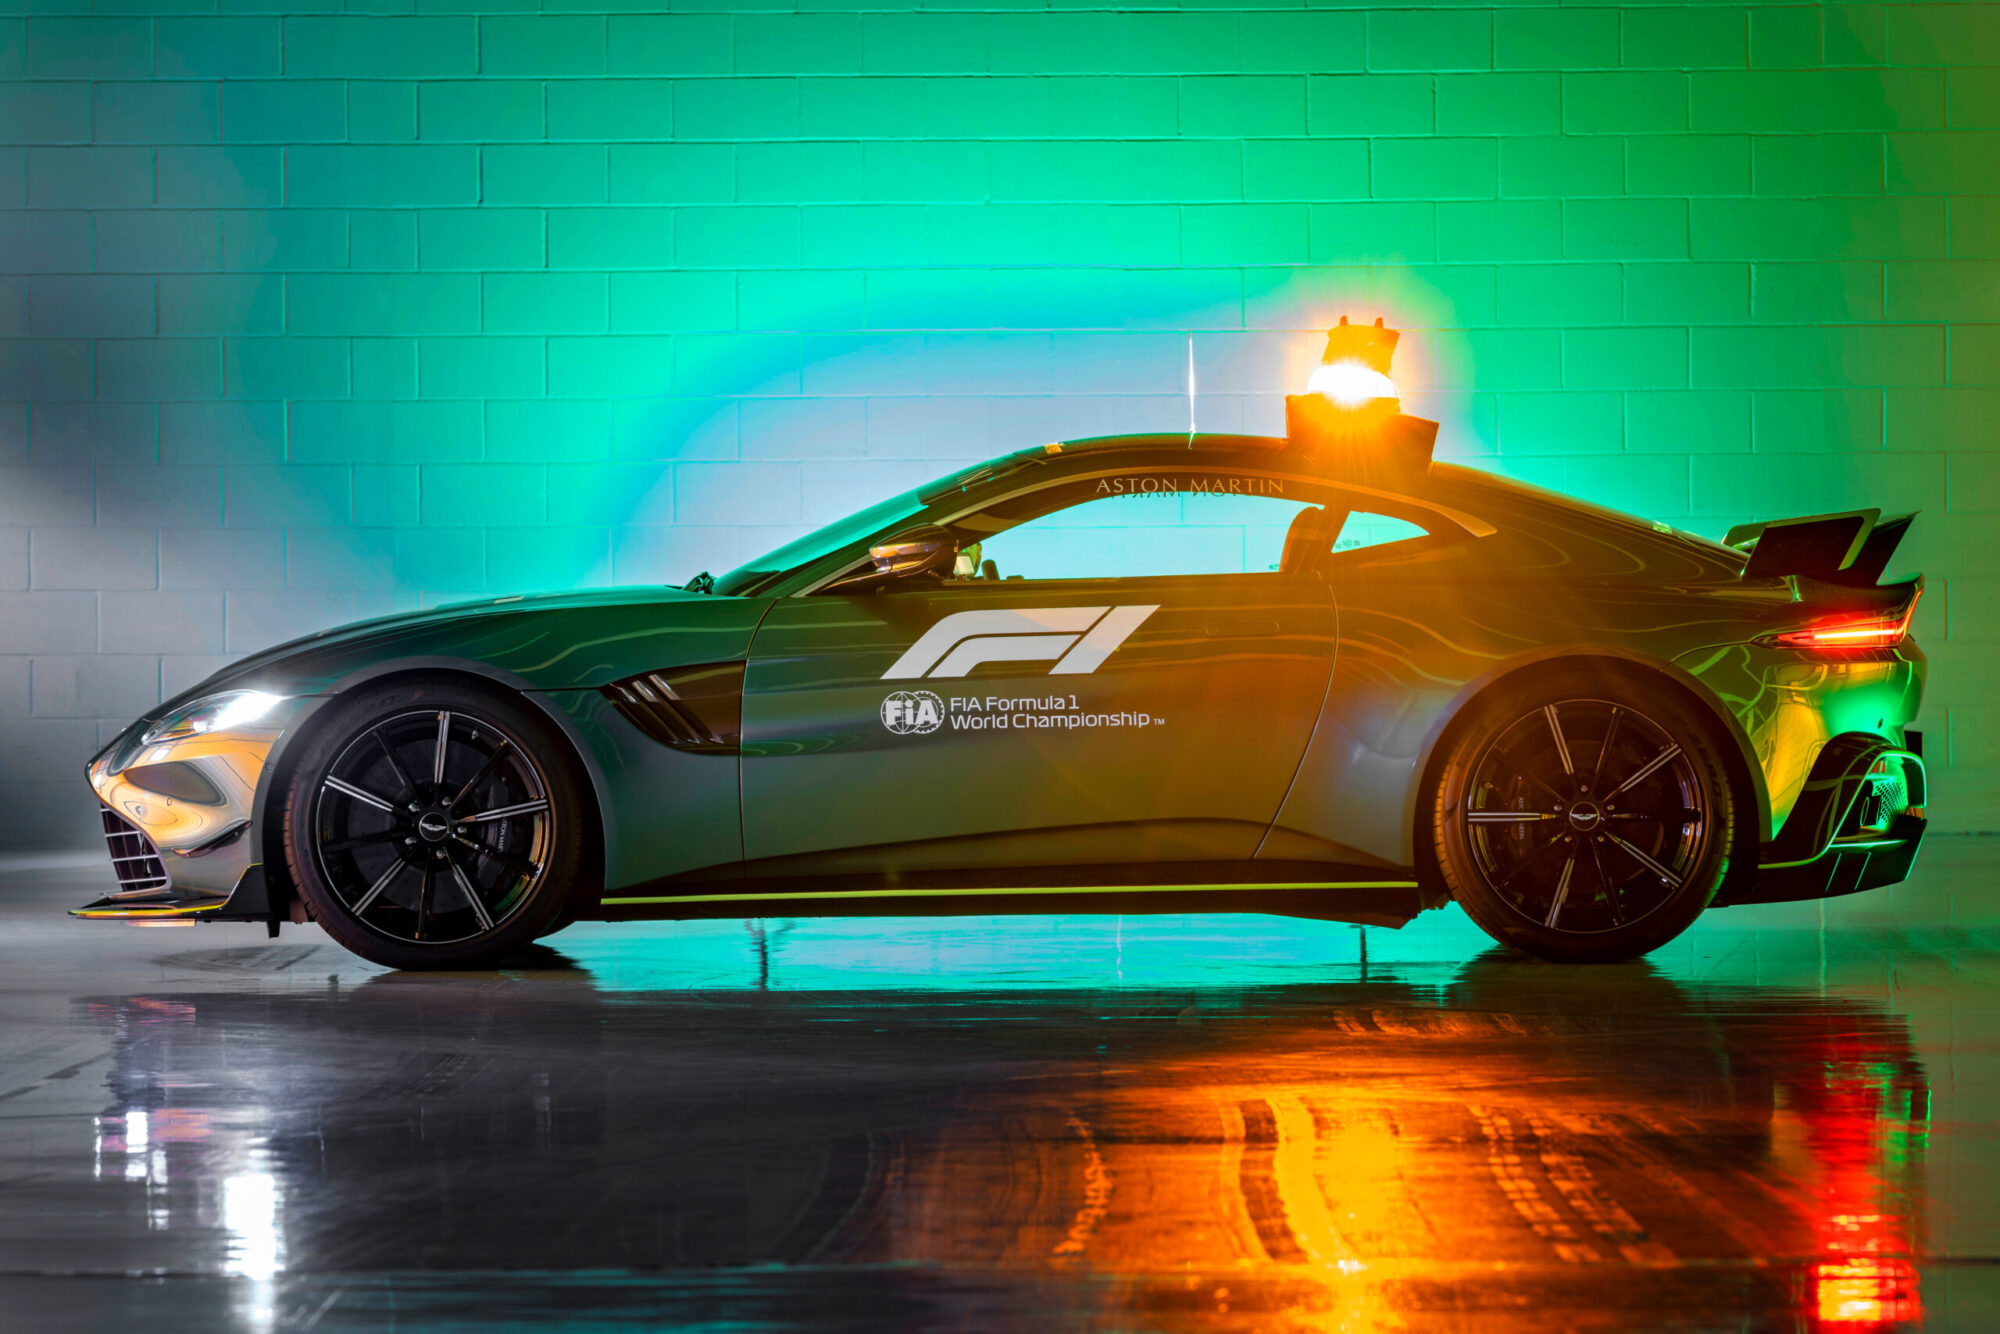 Aston Martin takes pole position as an Official Safety Car of